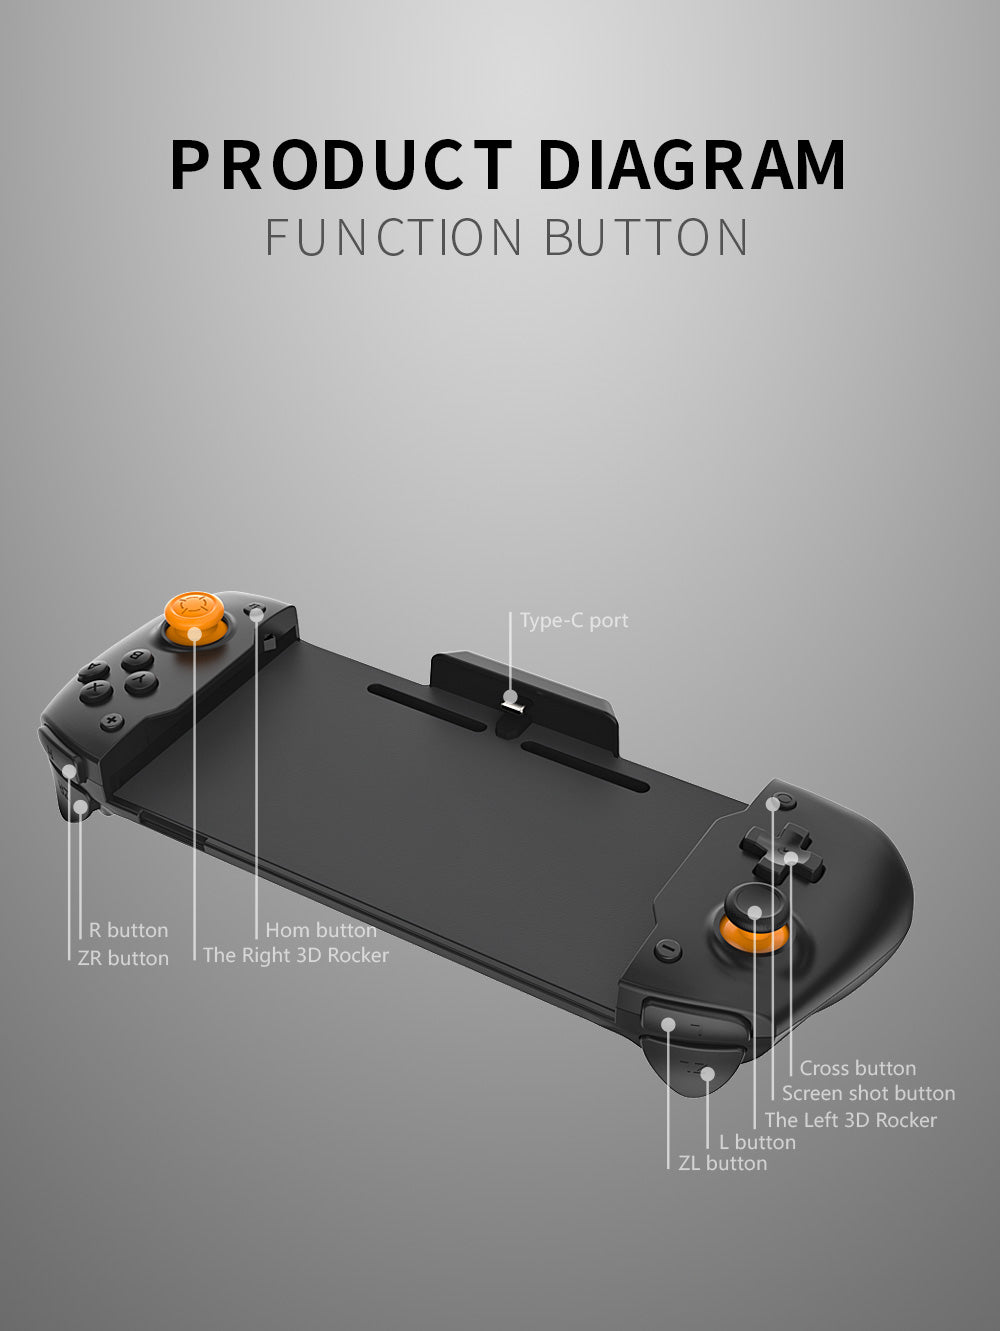 Nintendo Switch Controller Grip, Ergonomic Controller for Nintendo 